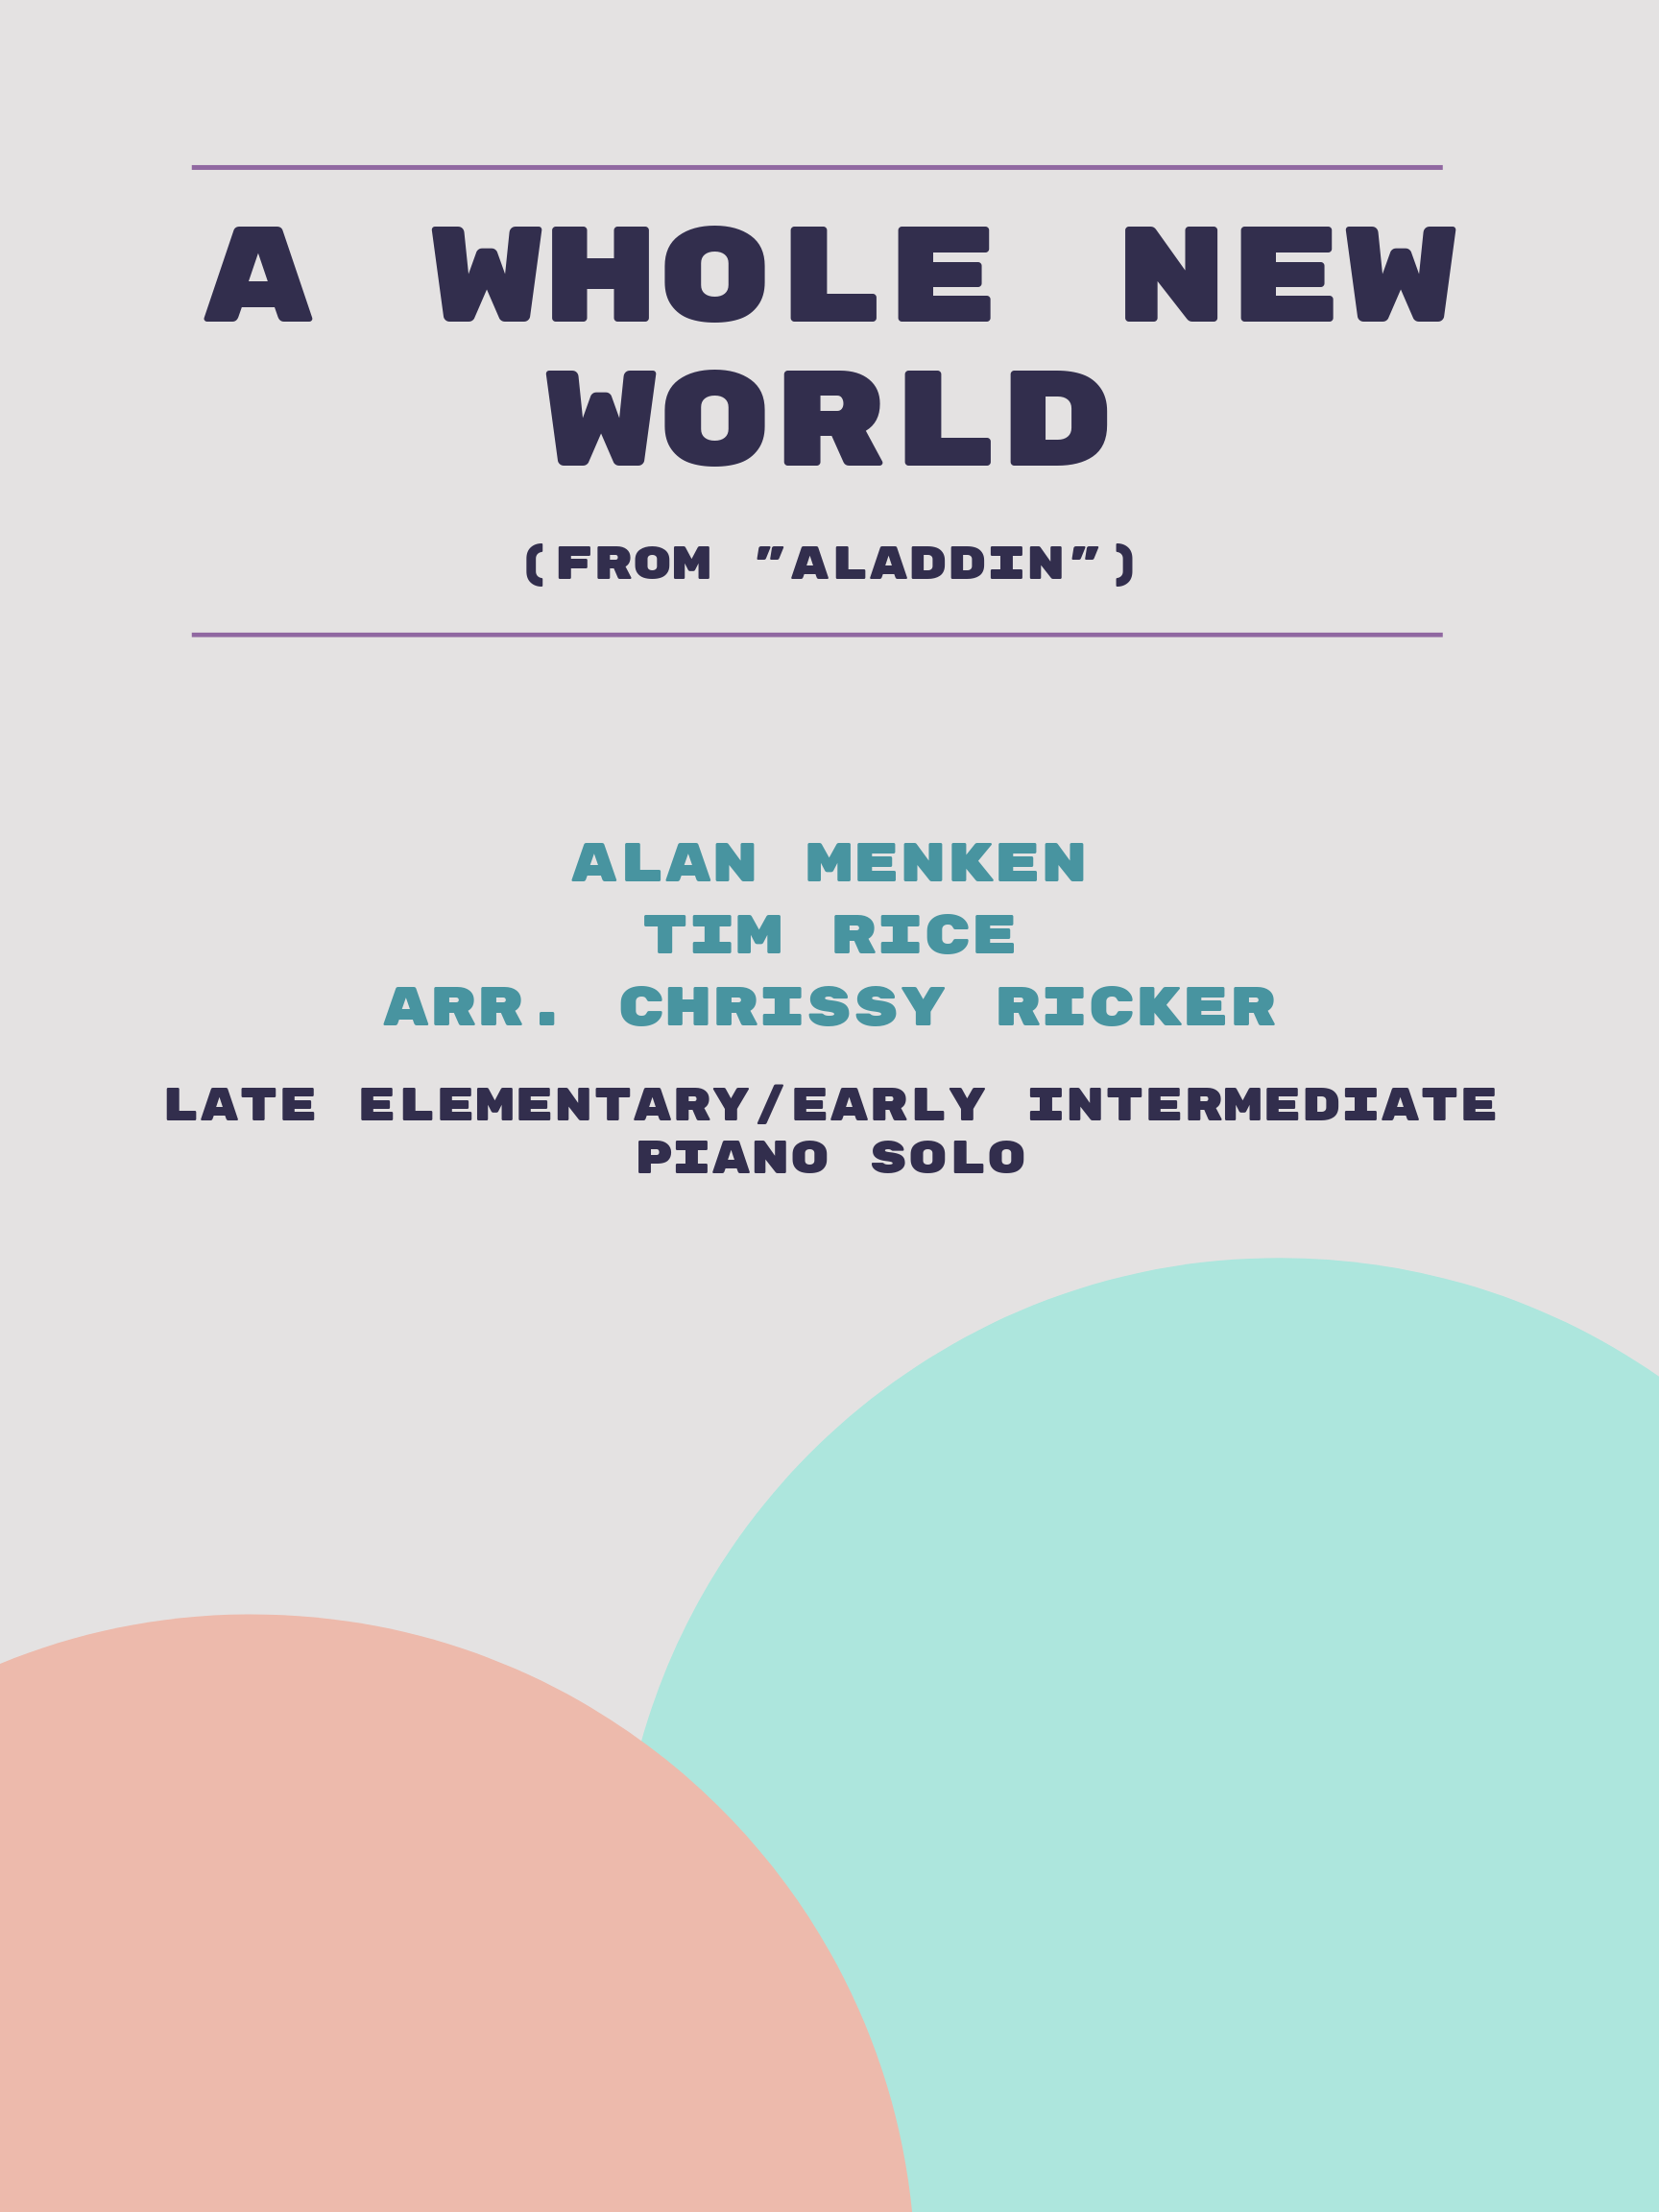 A Whole New World by Alan Menken, Tim Rice